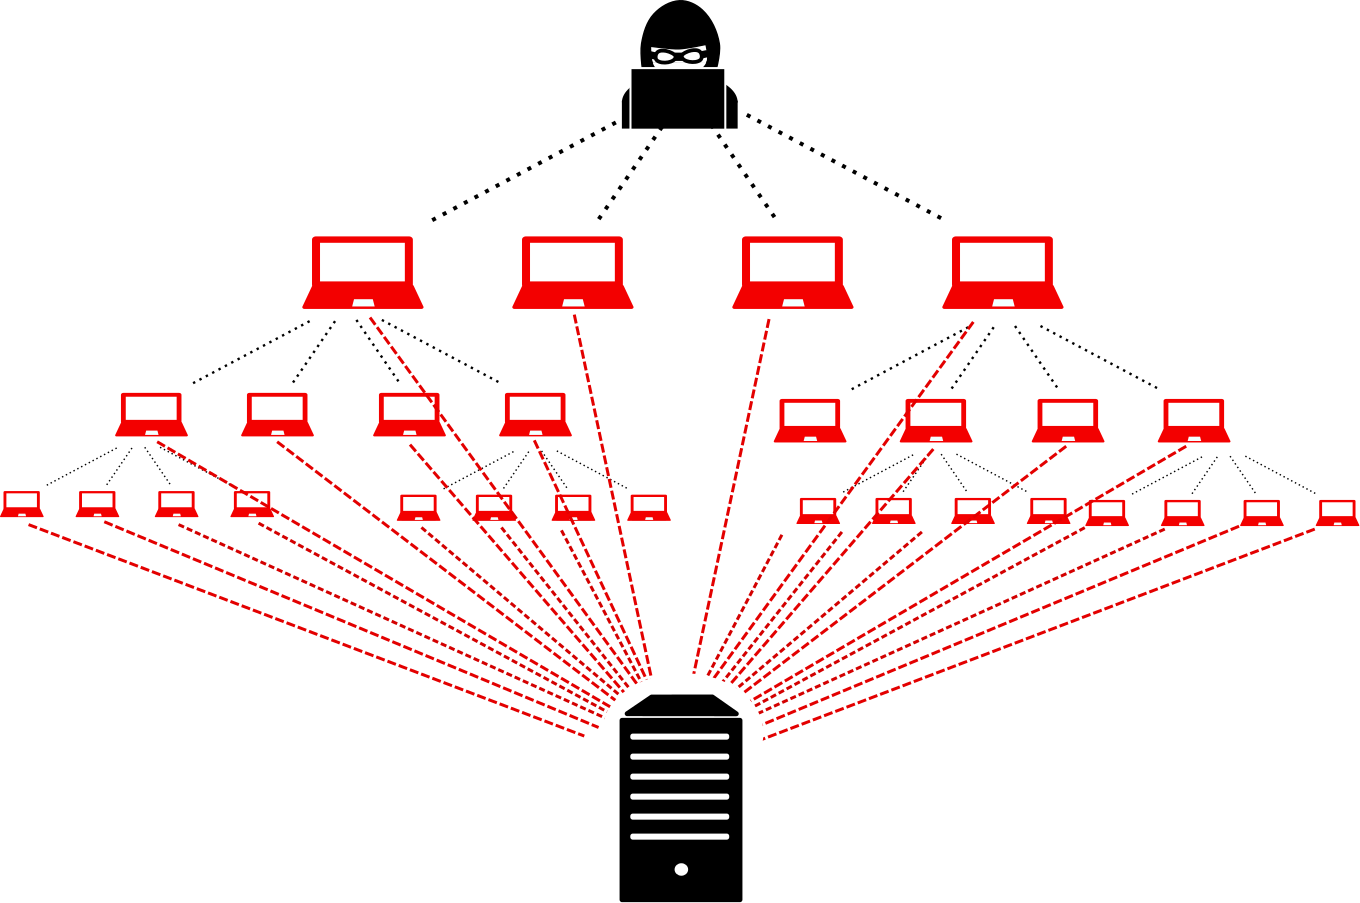 DDoS attack creation